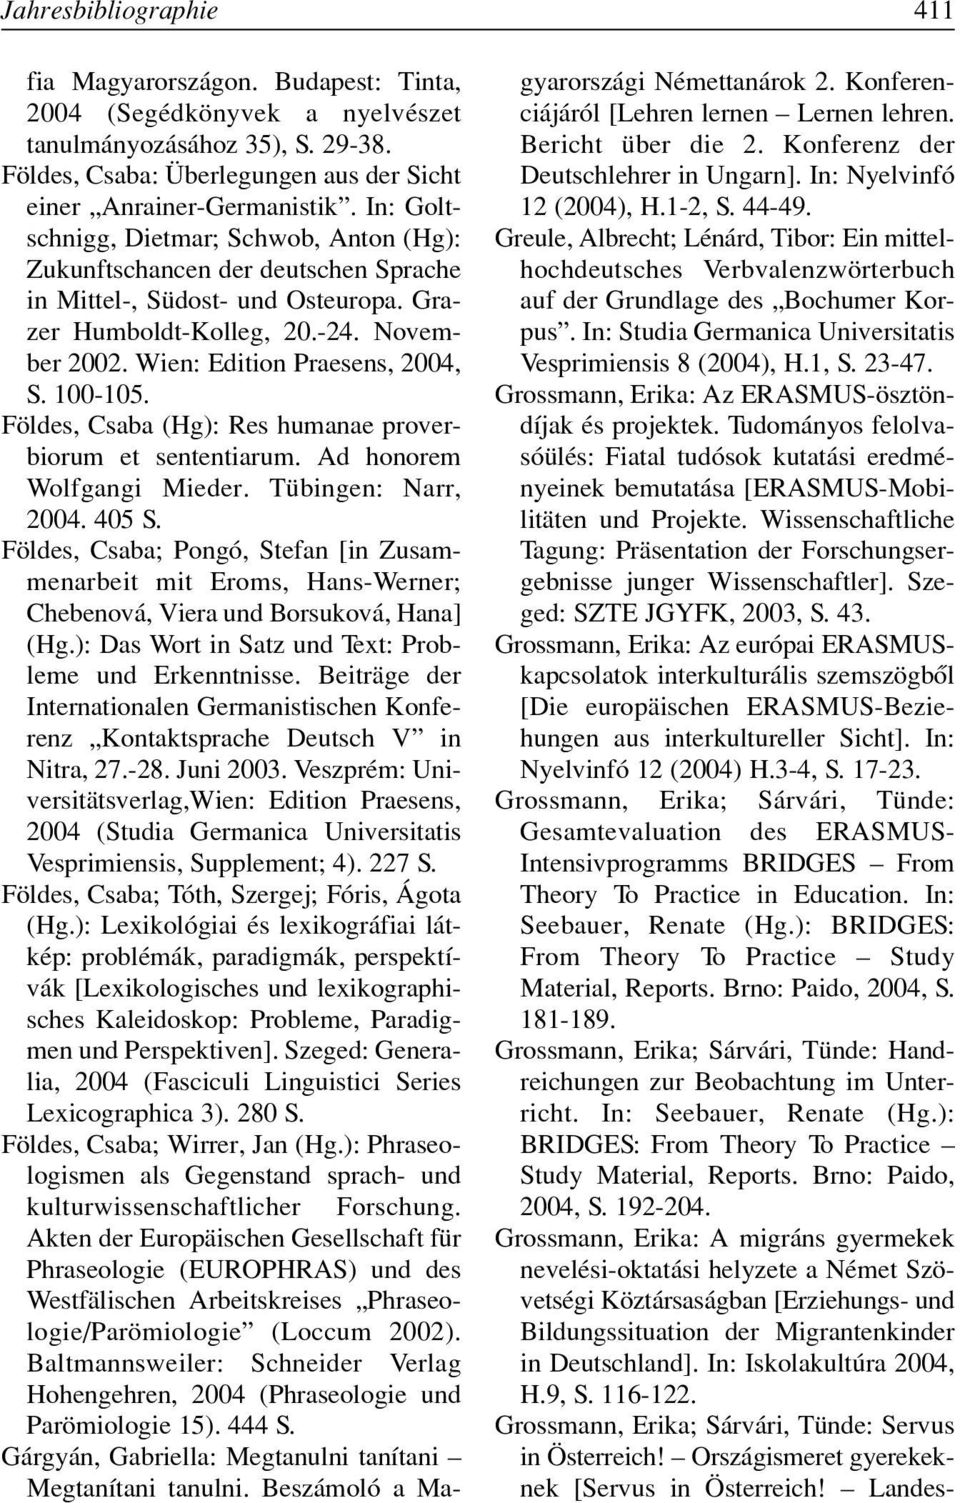 100-105. Földes, Csaba (Hg): Res humanae proverbiorum et sententiarum. Ad honorem Wolfgangi Mieder. Tübingen: Narr, 2004. 405 S.